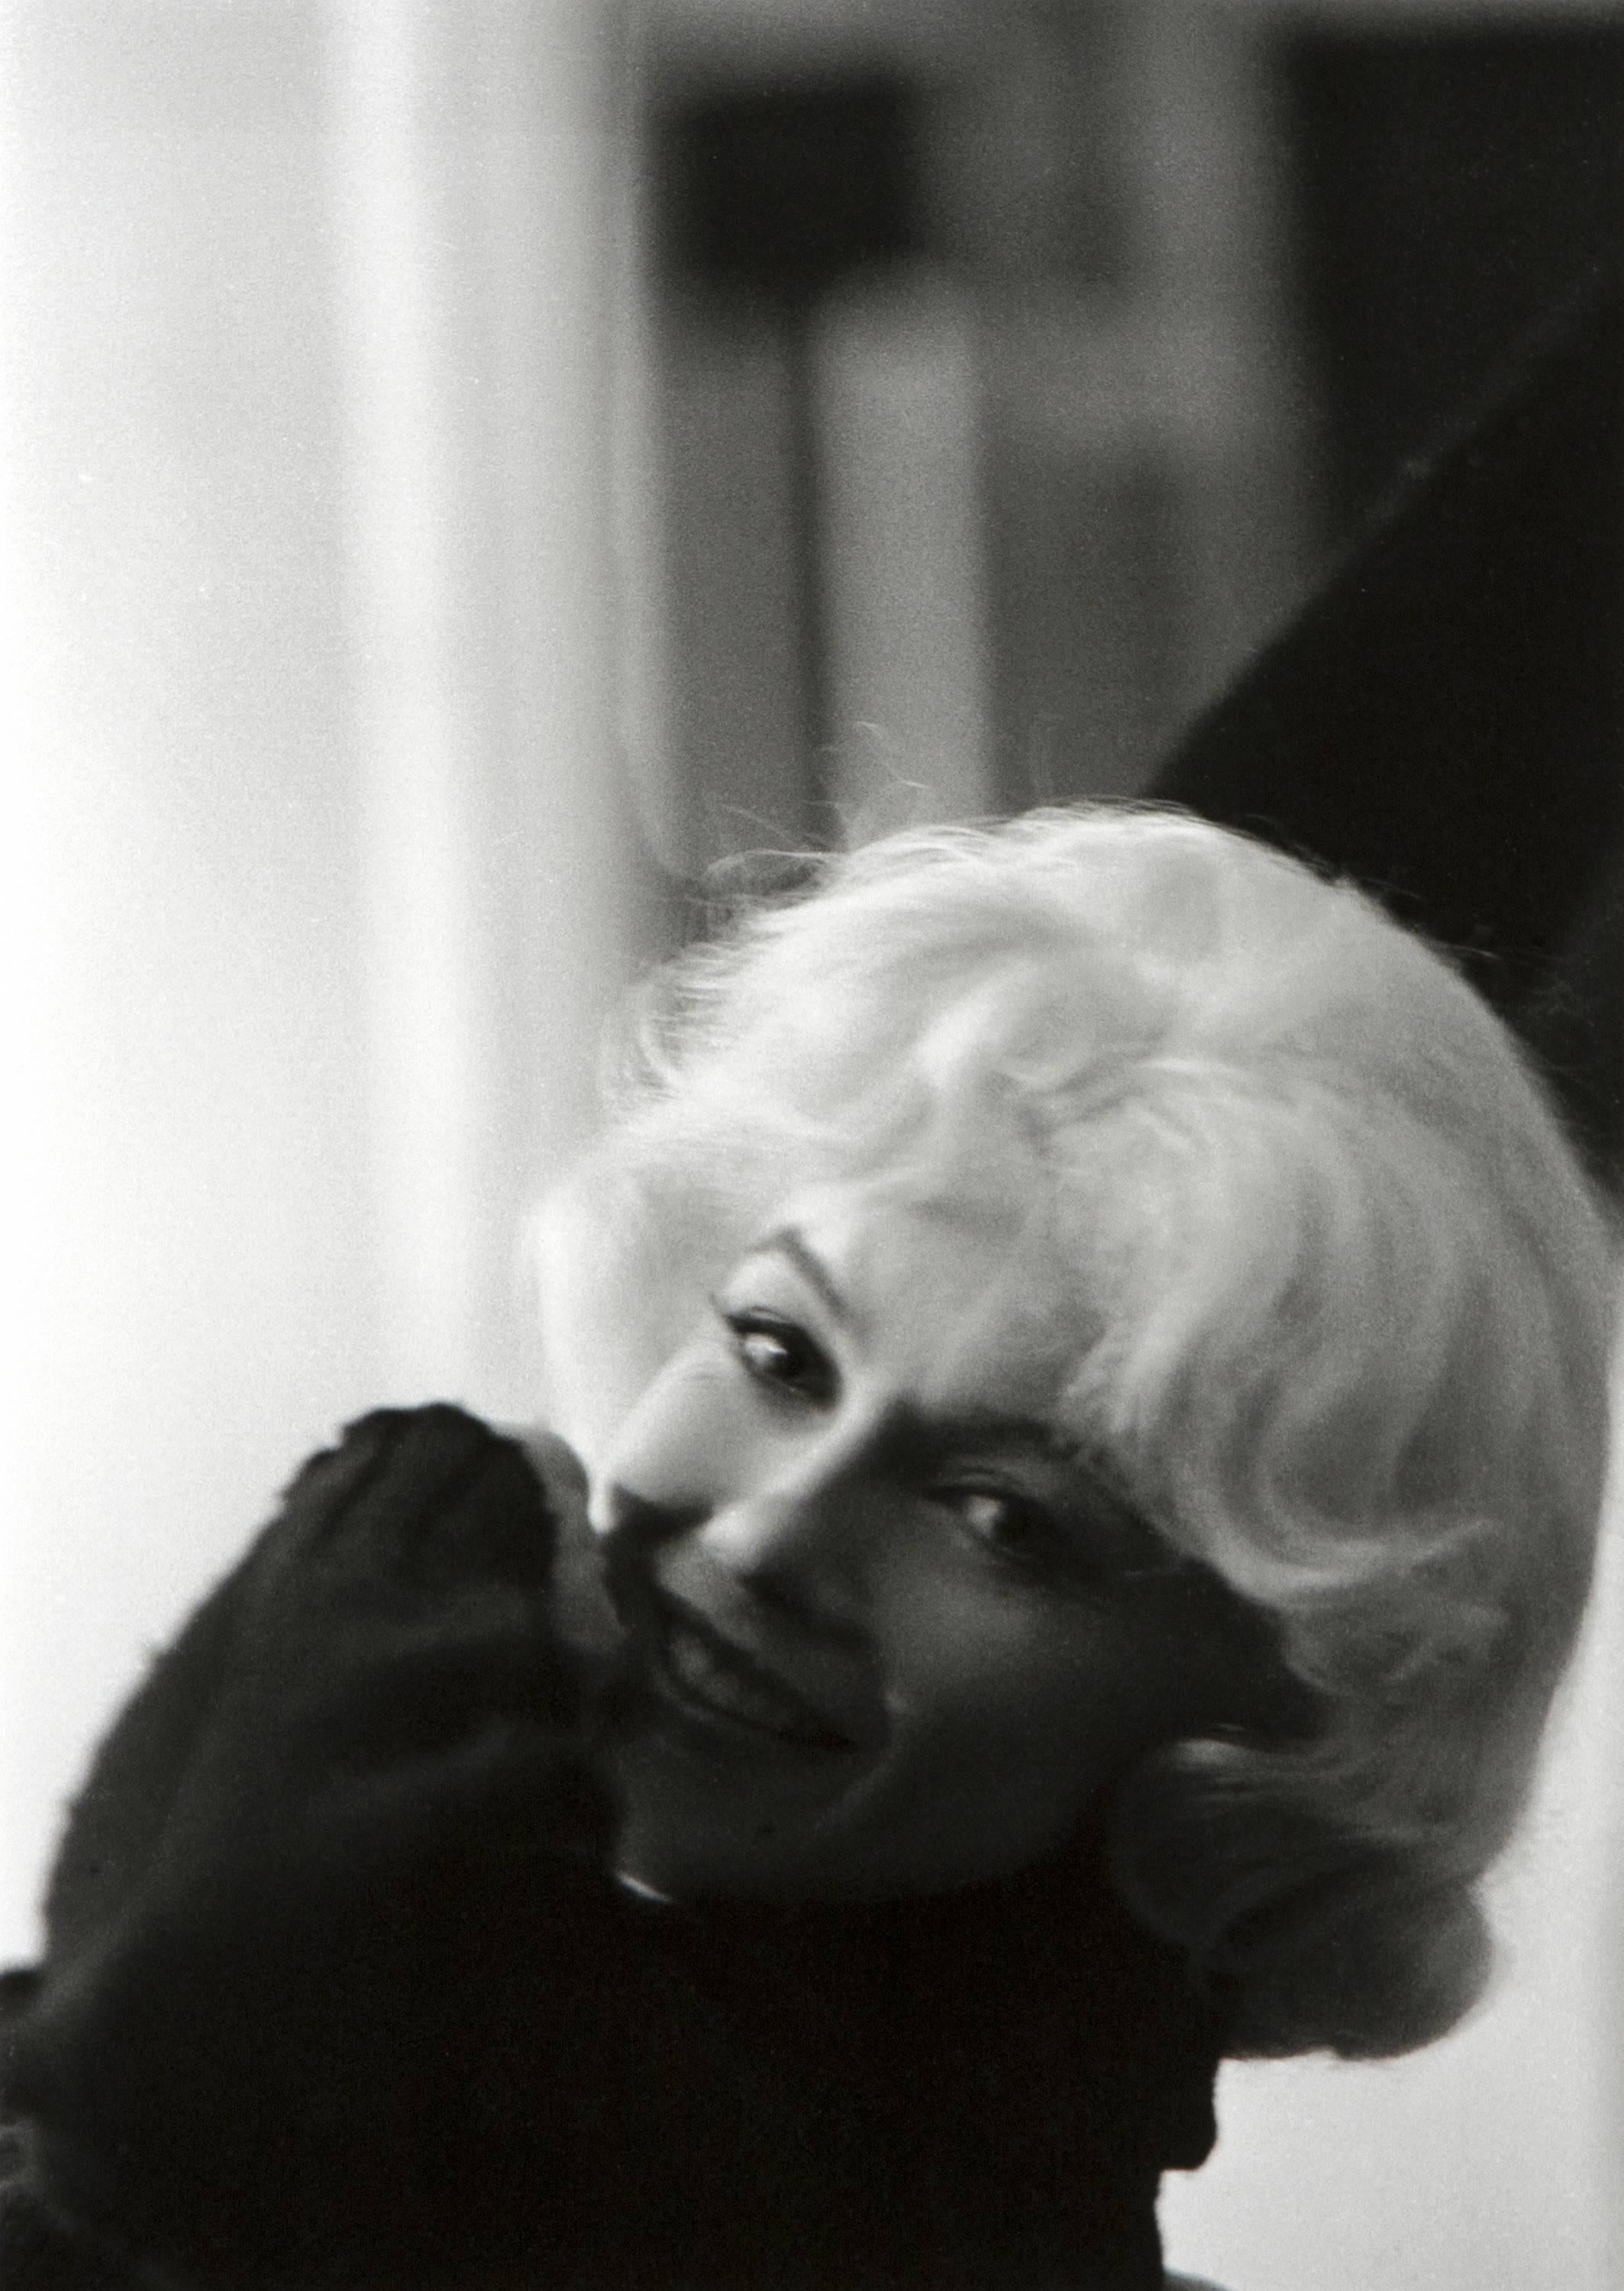 Lawrence Schiller Portrait Photograph - "Let's Make Love", Marilyn Monroe